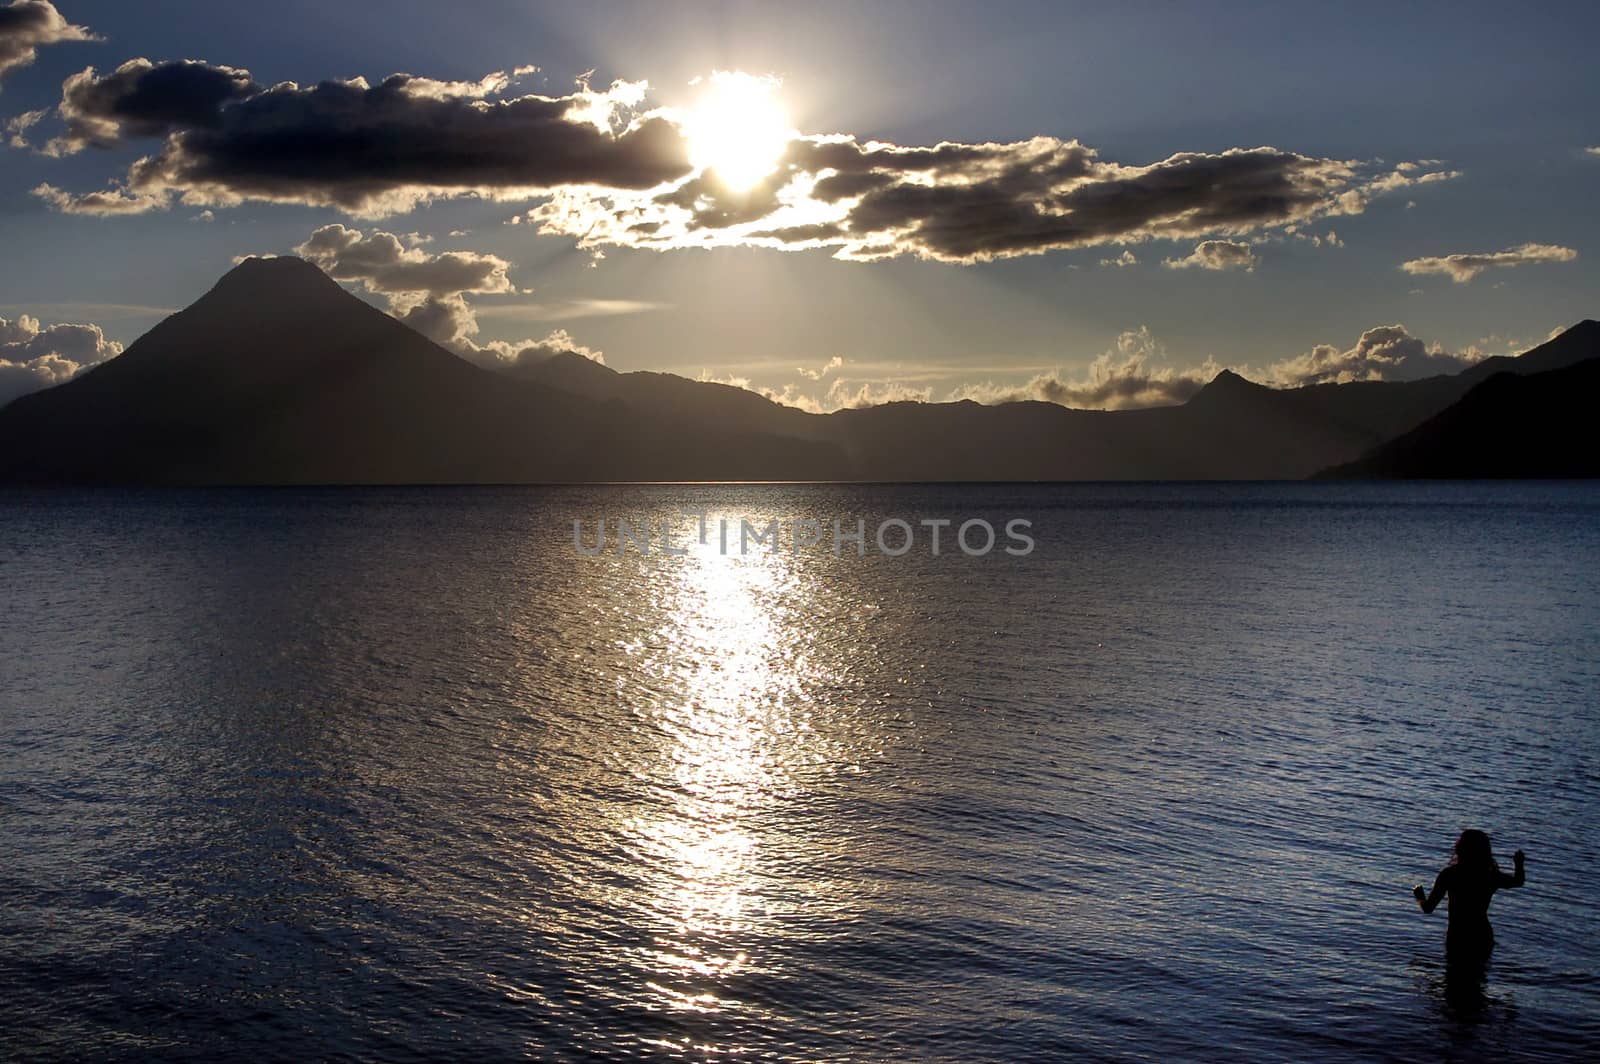  Volcanic Atitlan Lake in Guatemala with a woman at sunset